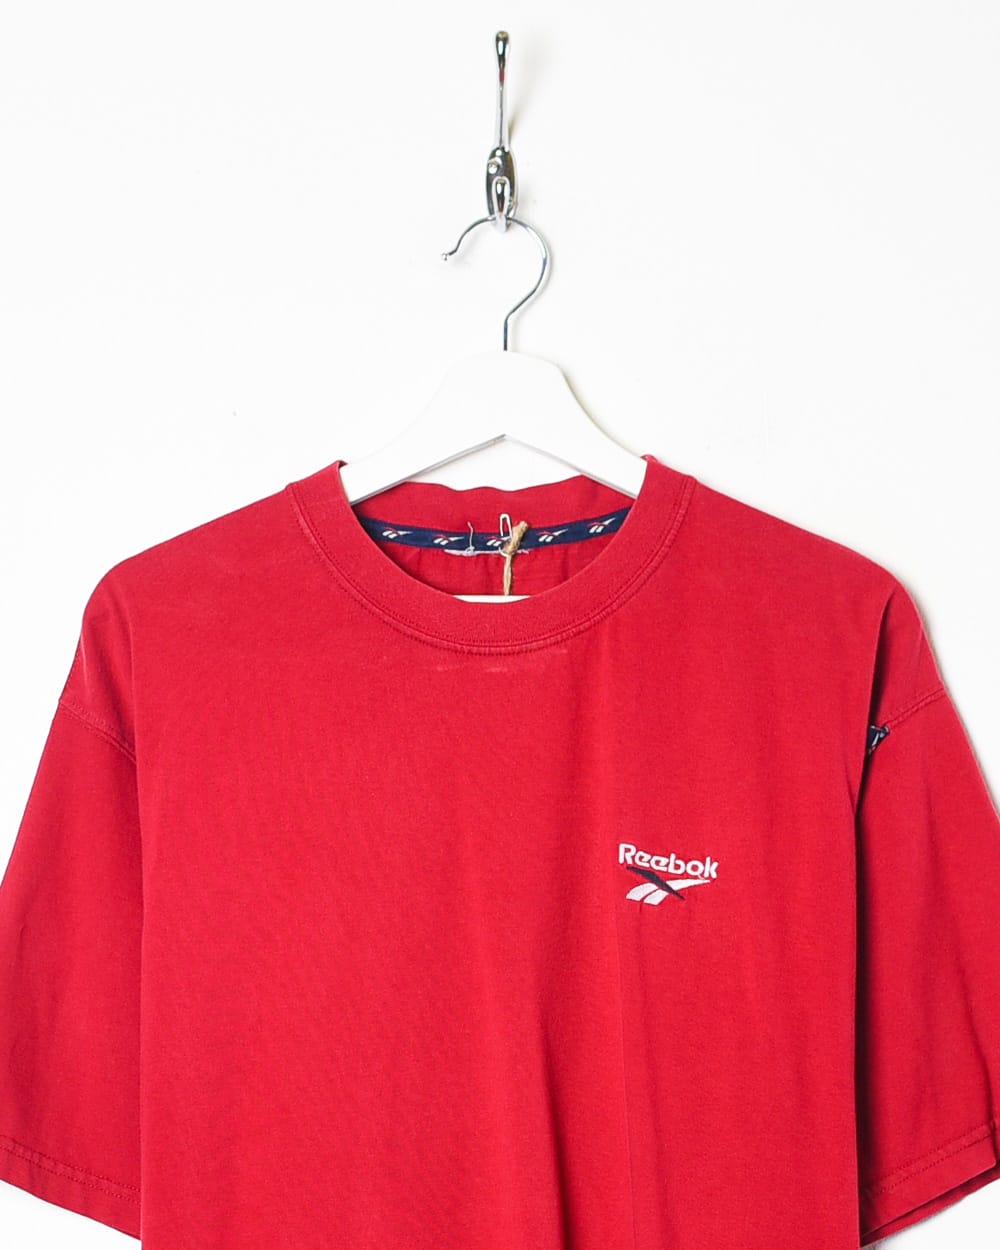 Red Reebok T-Shirt - Medium